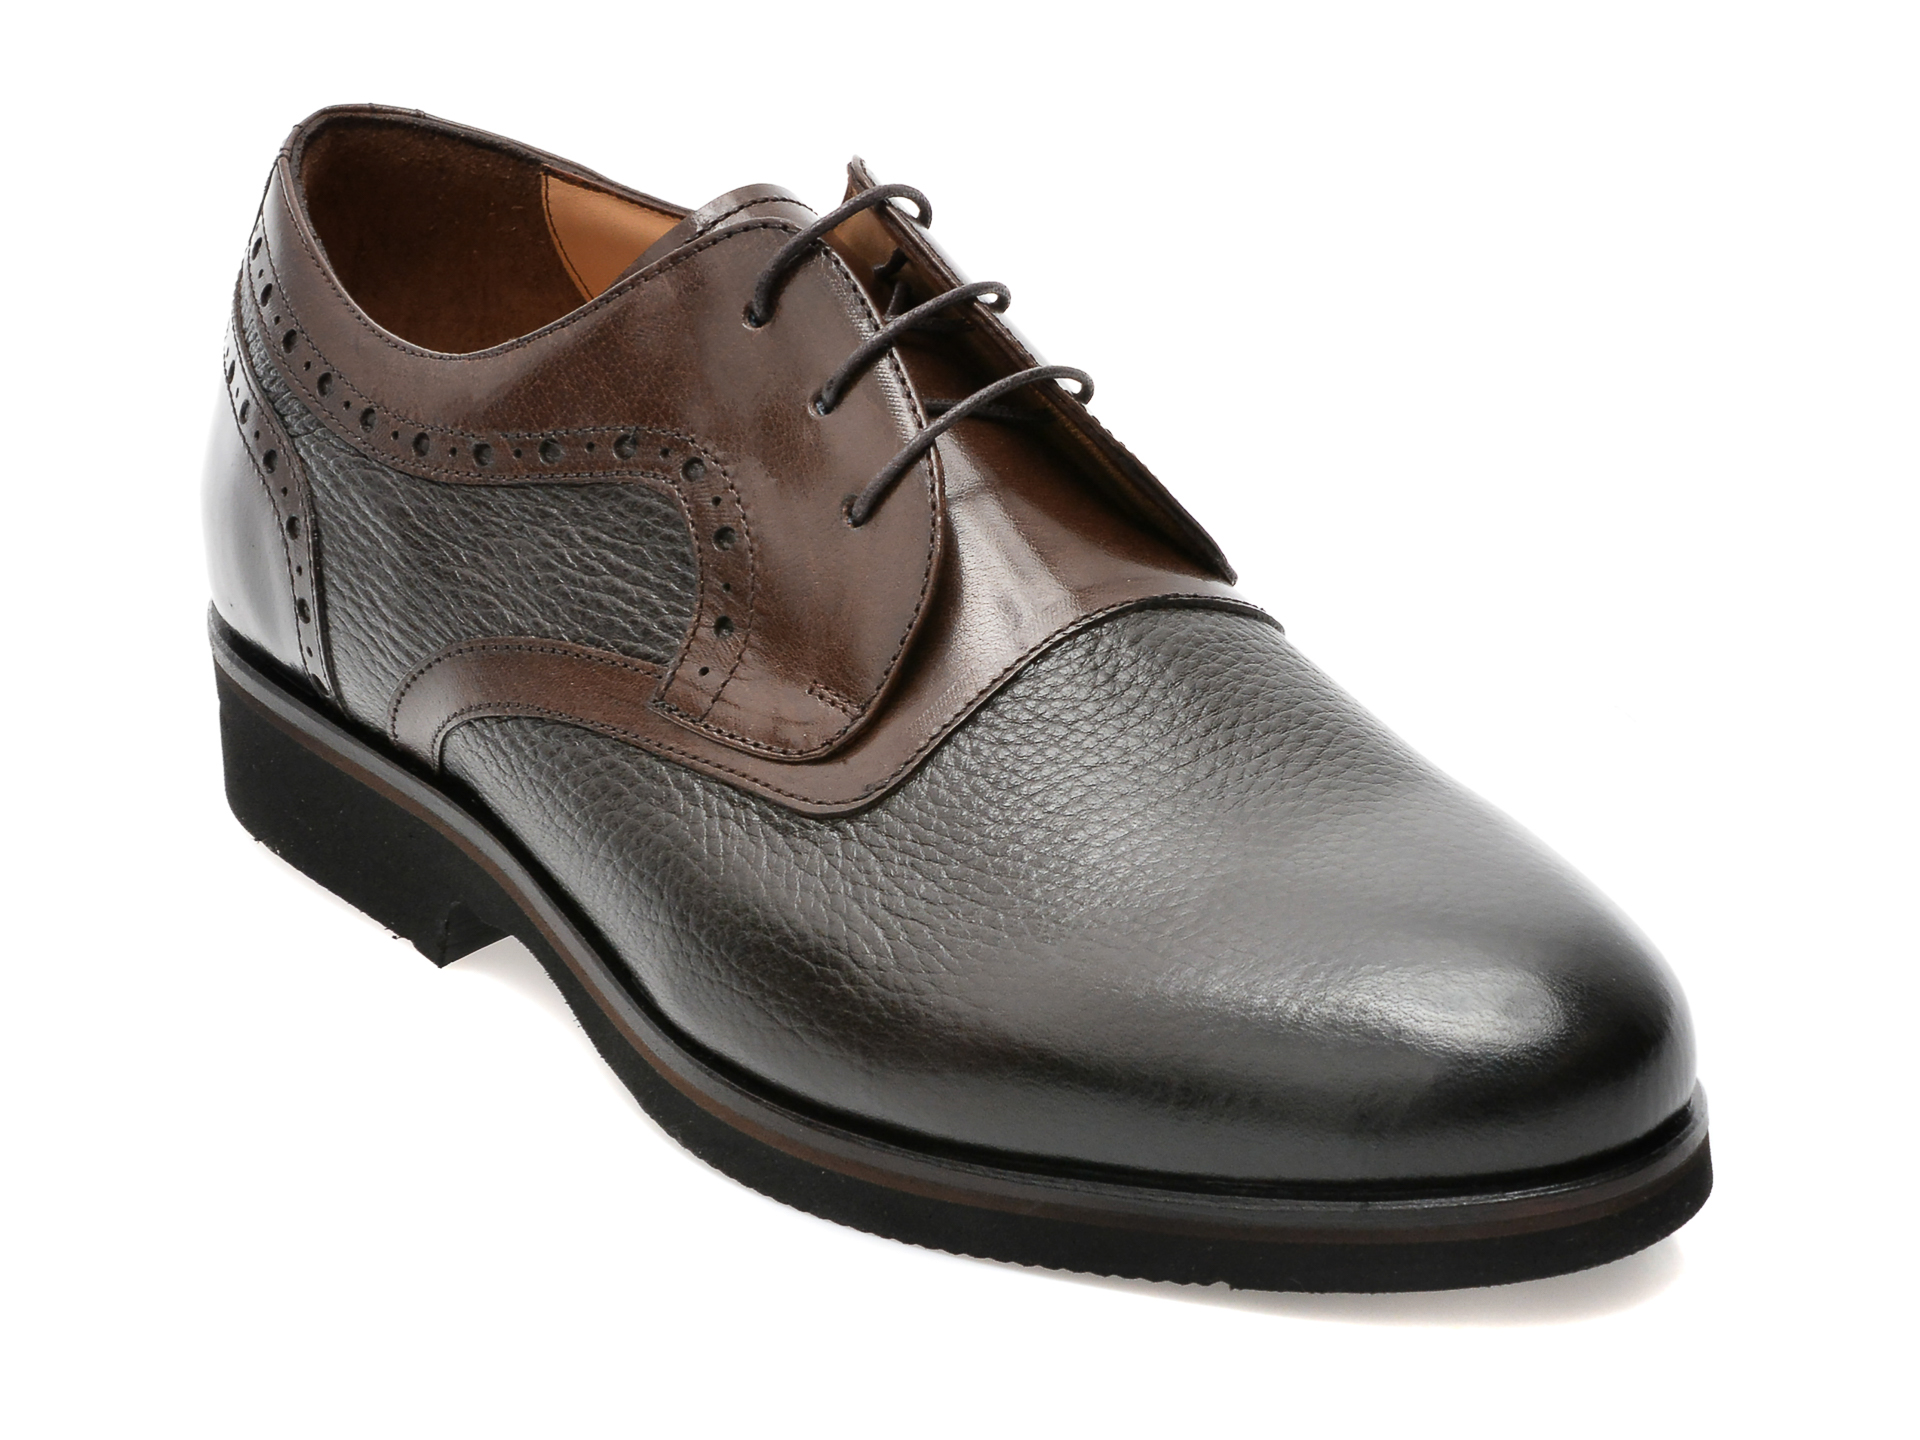 Pantofi EPICA maro, 62242, din piele naturala /barbati/pantofi /barbati/pantofi